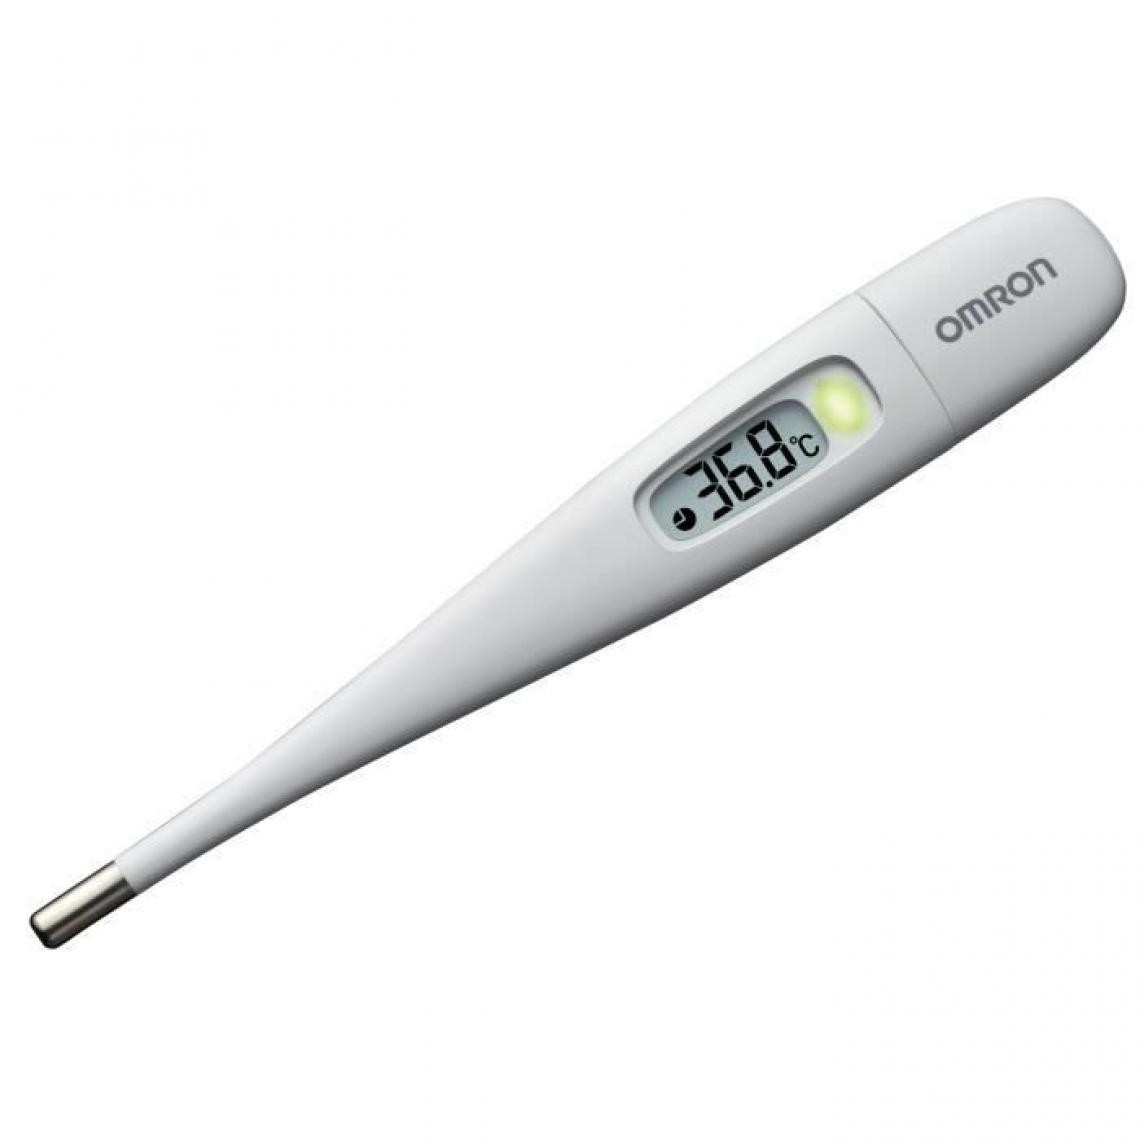 Omron - OMRON Thermometre digital Eco Temp Intelli IT, connecte Bluetooth - Thermomètre connecté